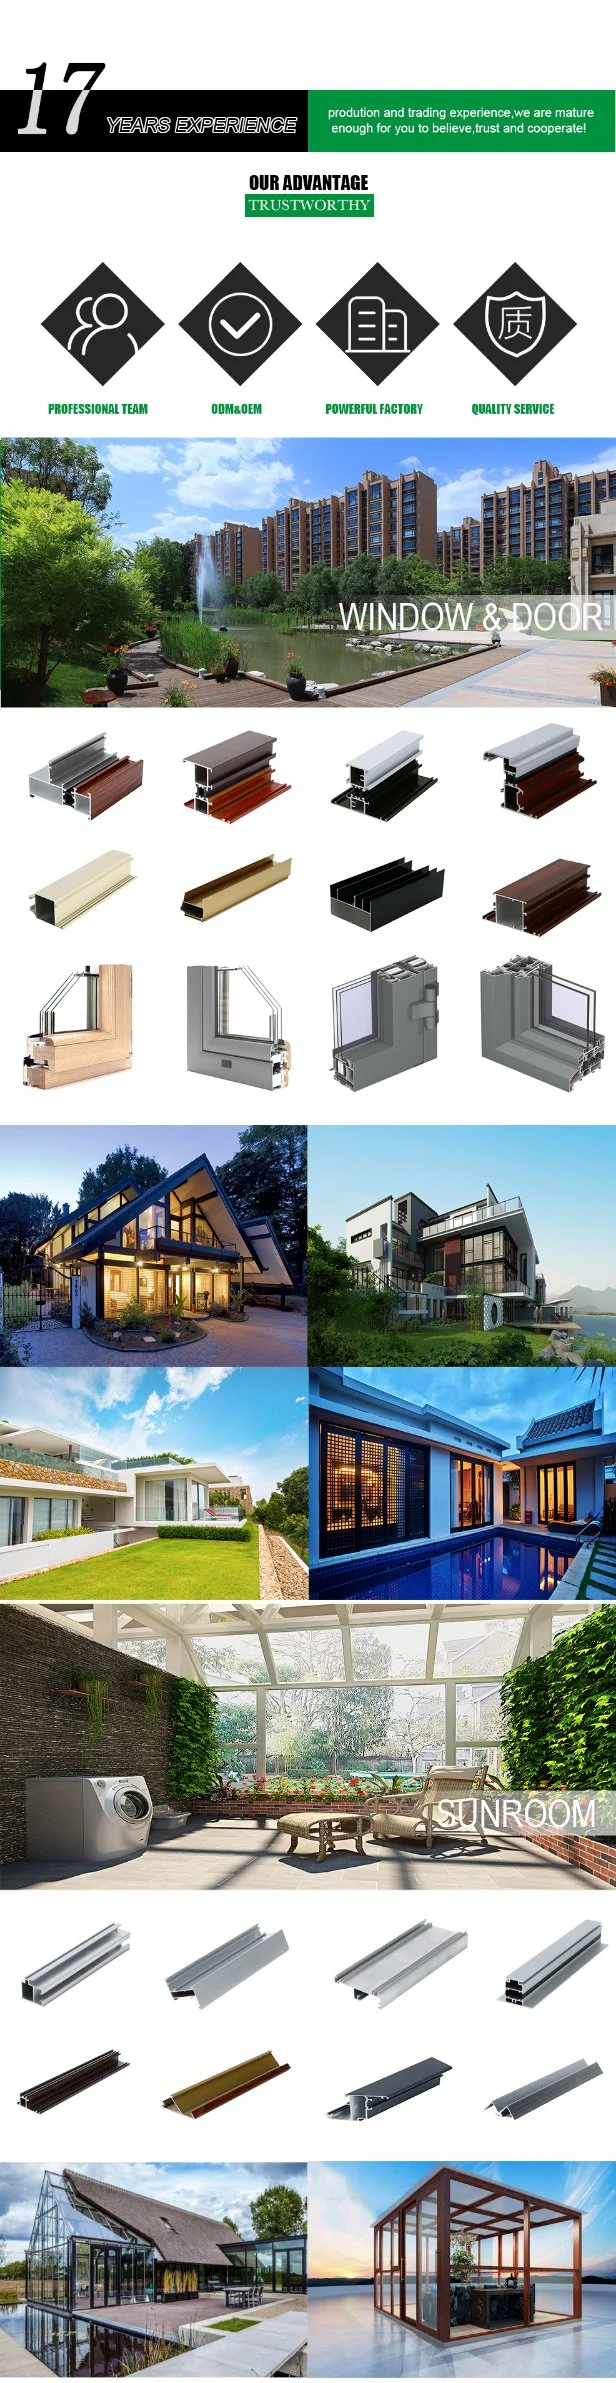 China Manufacturer Aluminium Greenhouse Frame Profile Little House Decorating Sunrooms